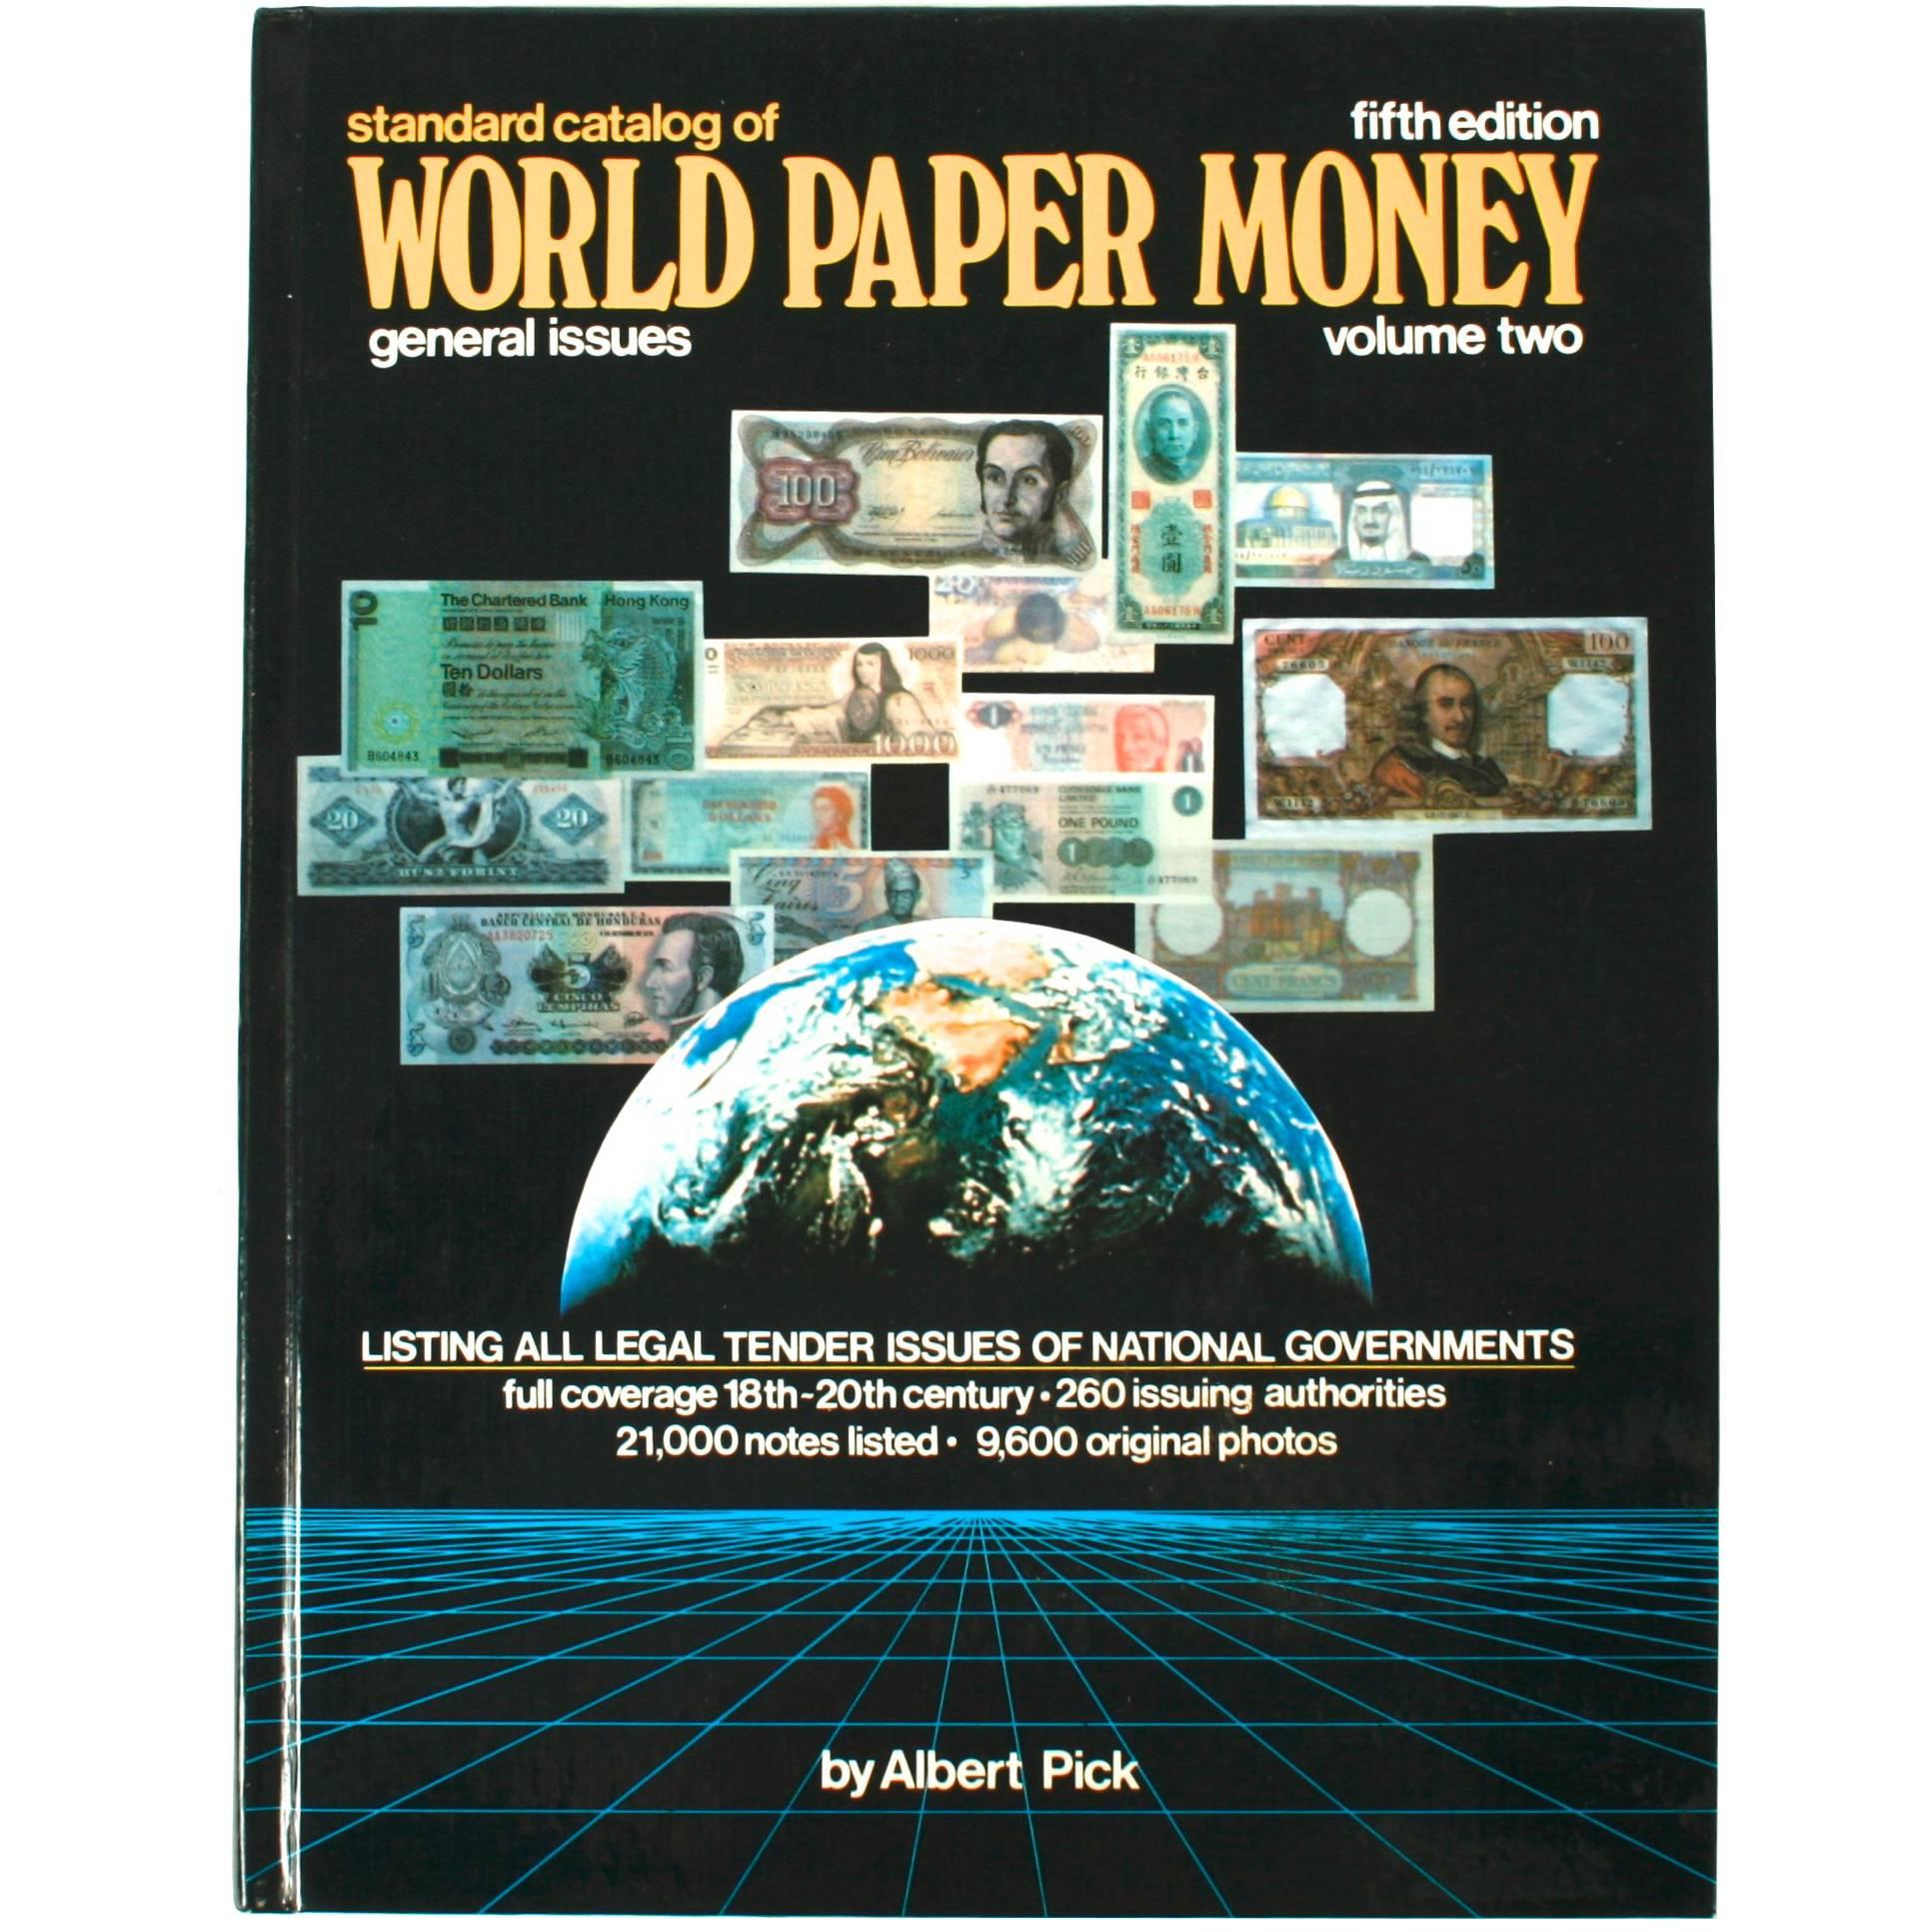 Standard Catalogue of World Paper Money by Albert Pick